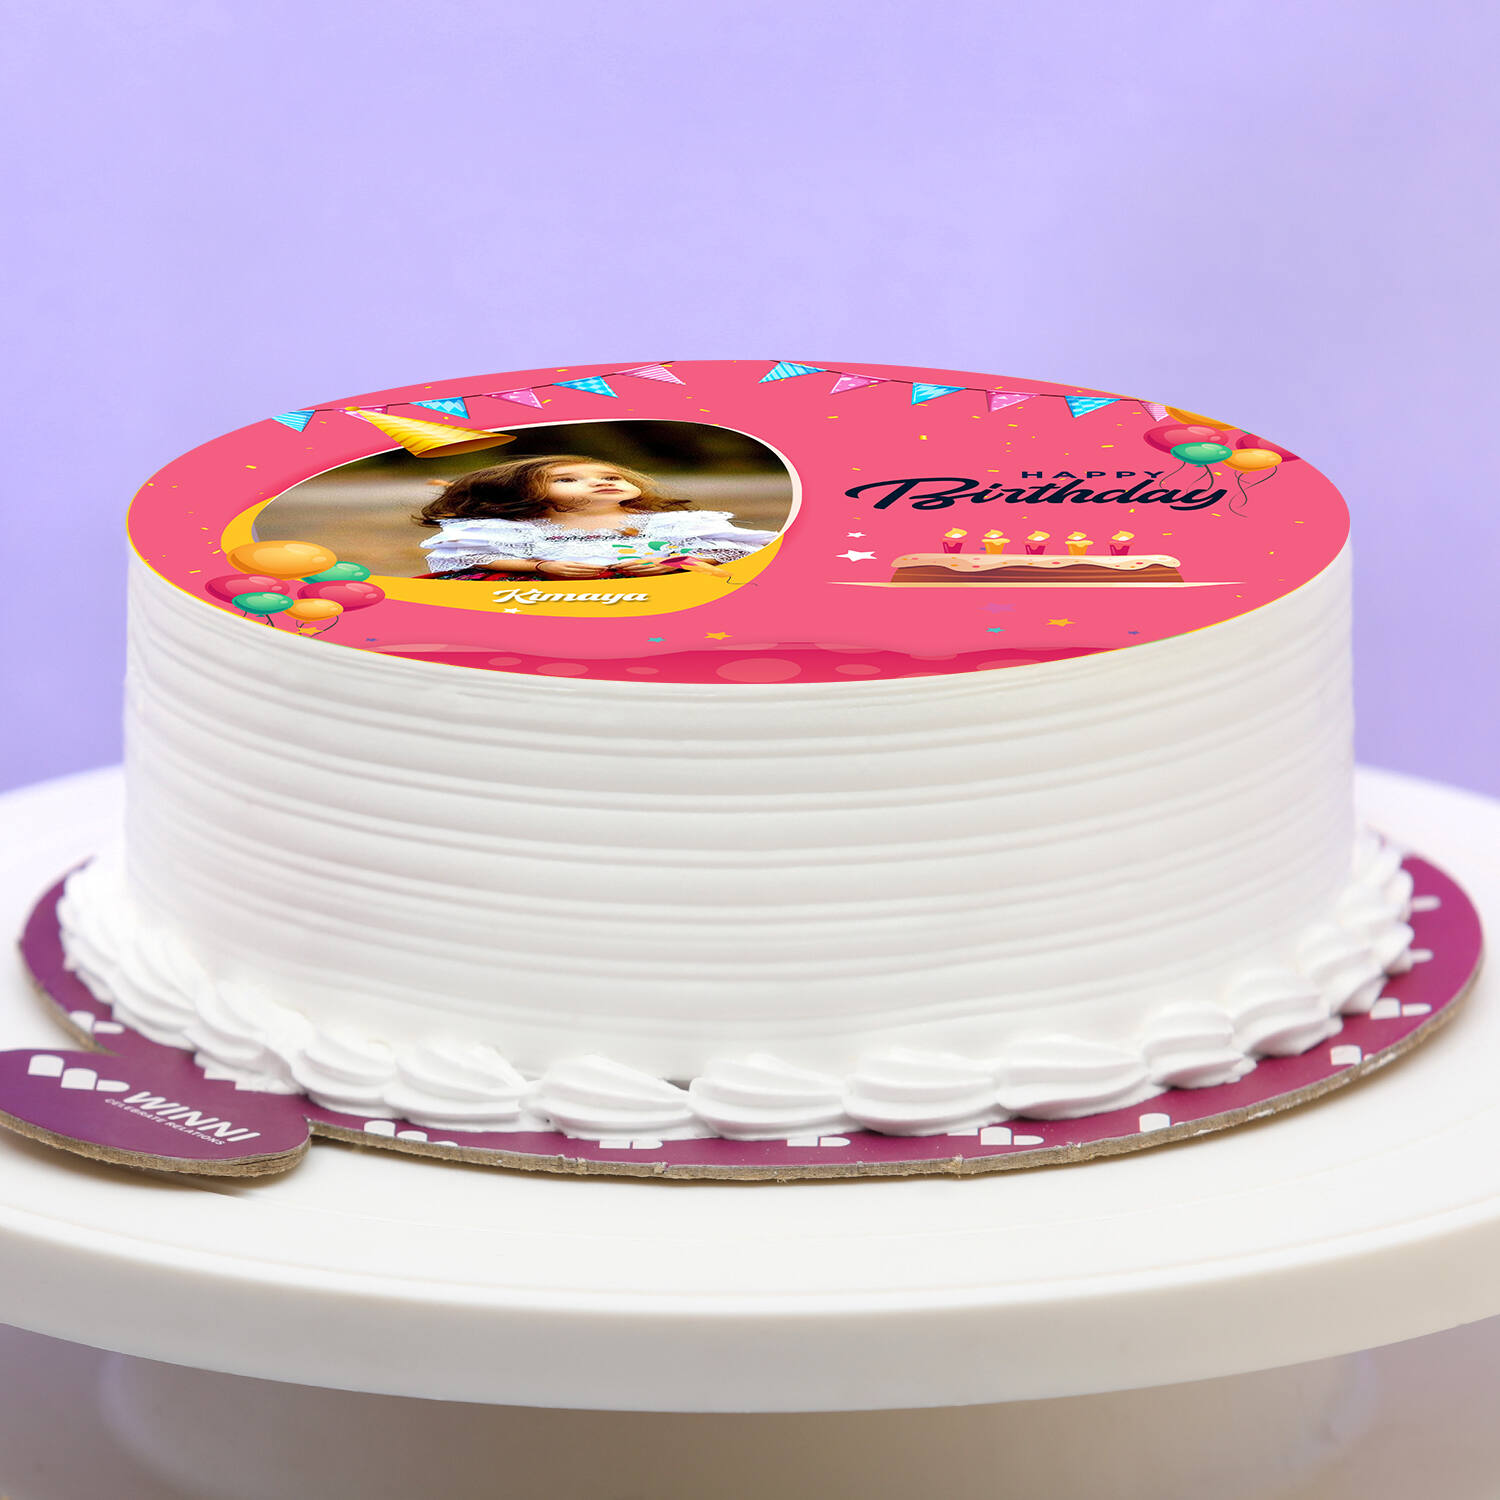 1st birthday cakes for baby girl princess | Instagram